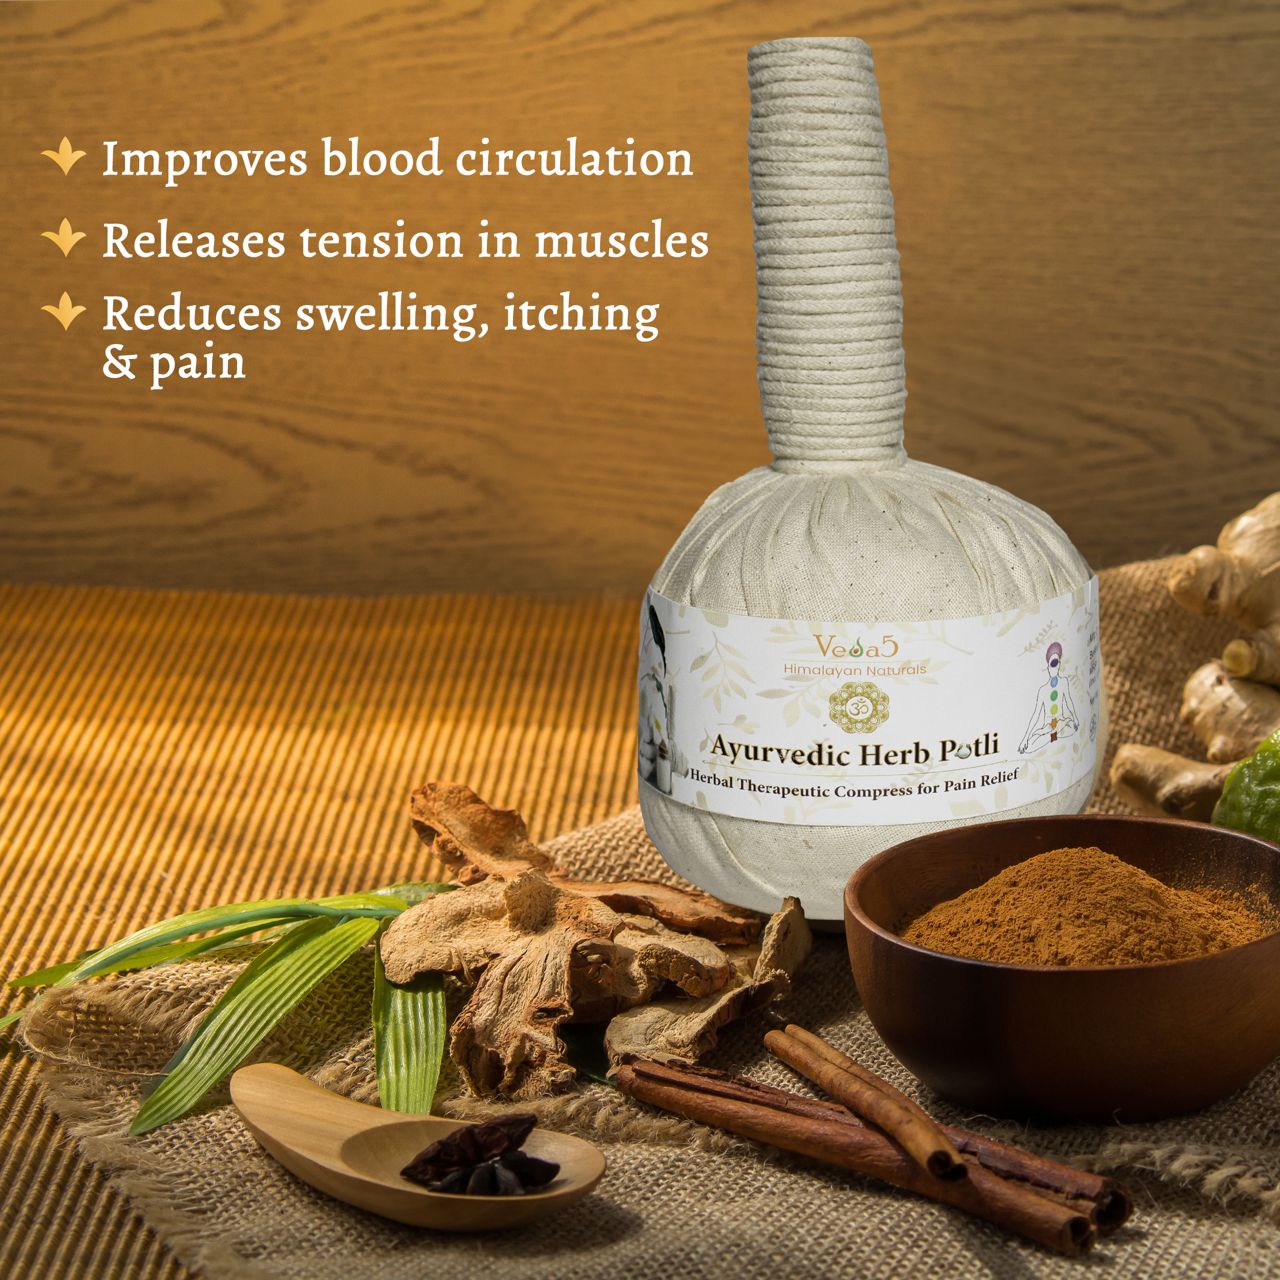 Ayurvedic Herbal Potli Therapeutic Potli for Pain Benefits 2 Veda5 Himalayan Naturals